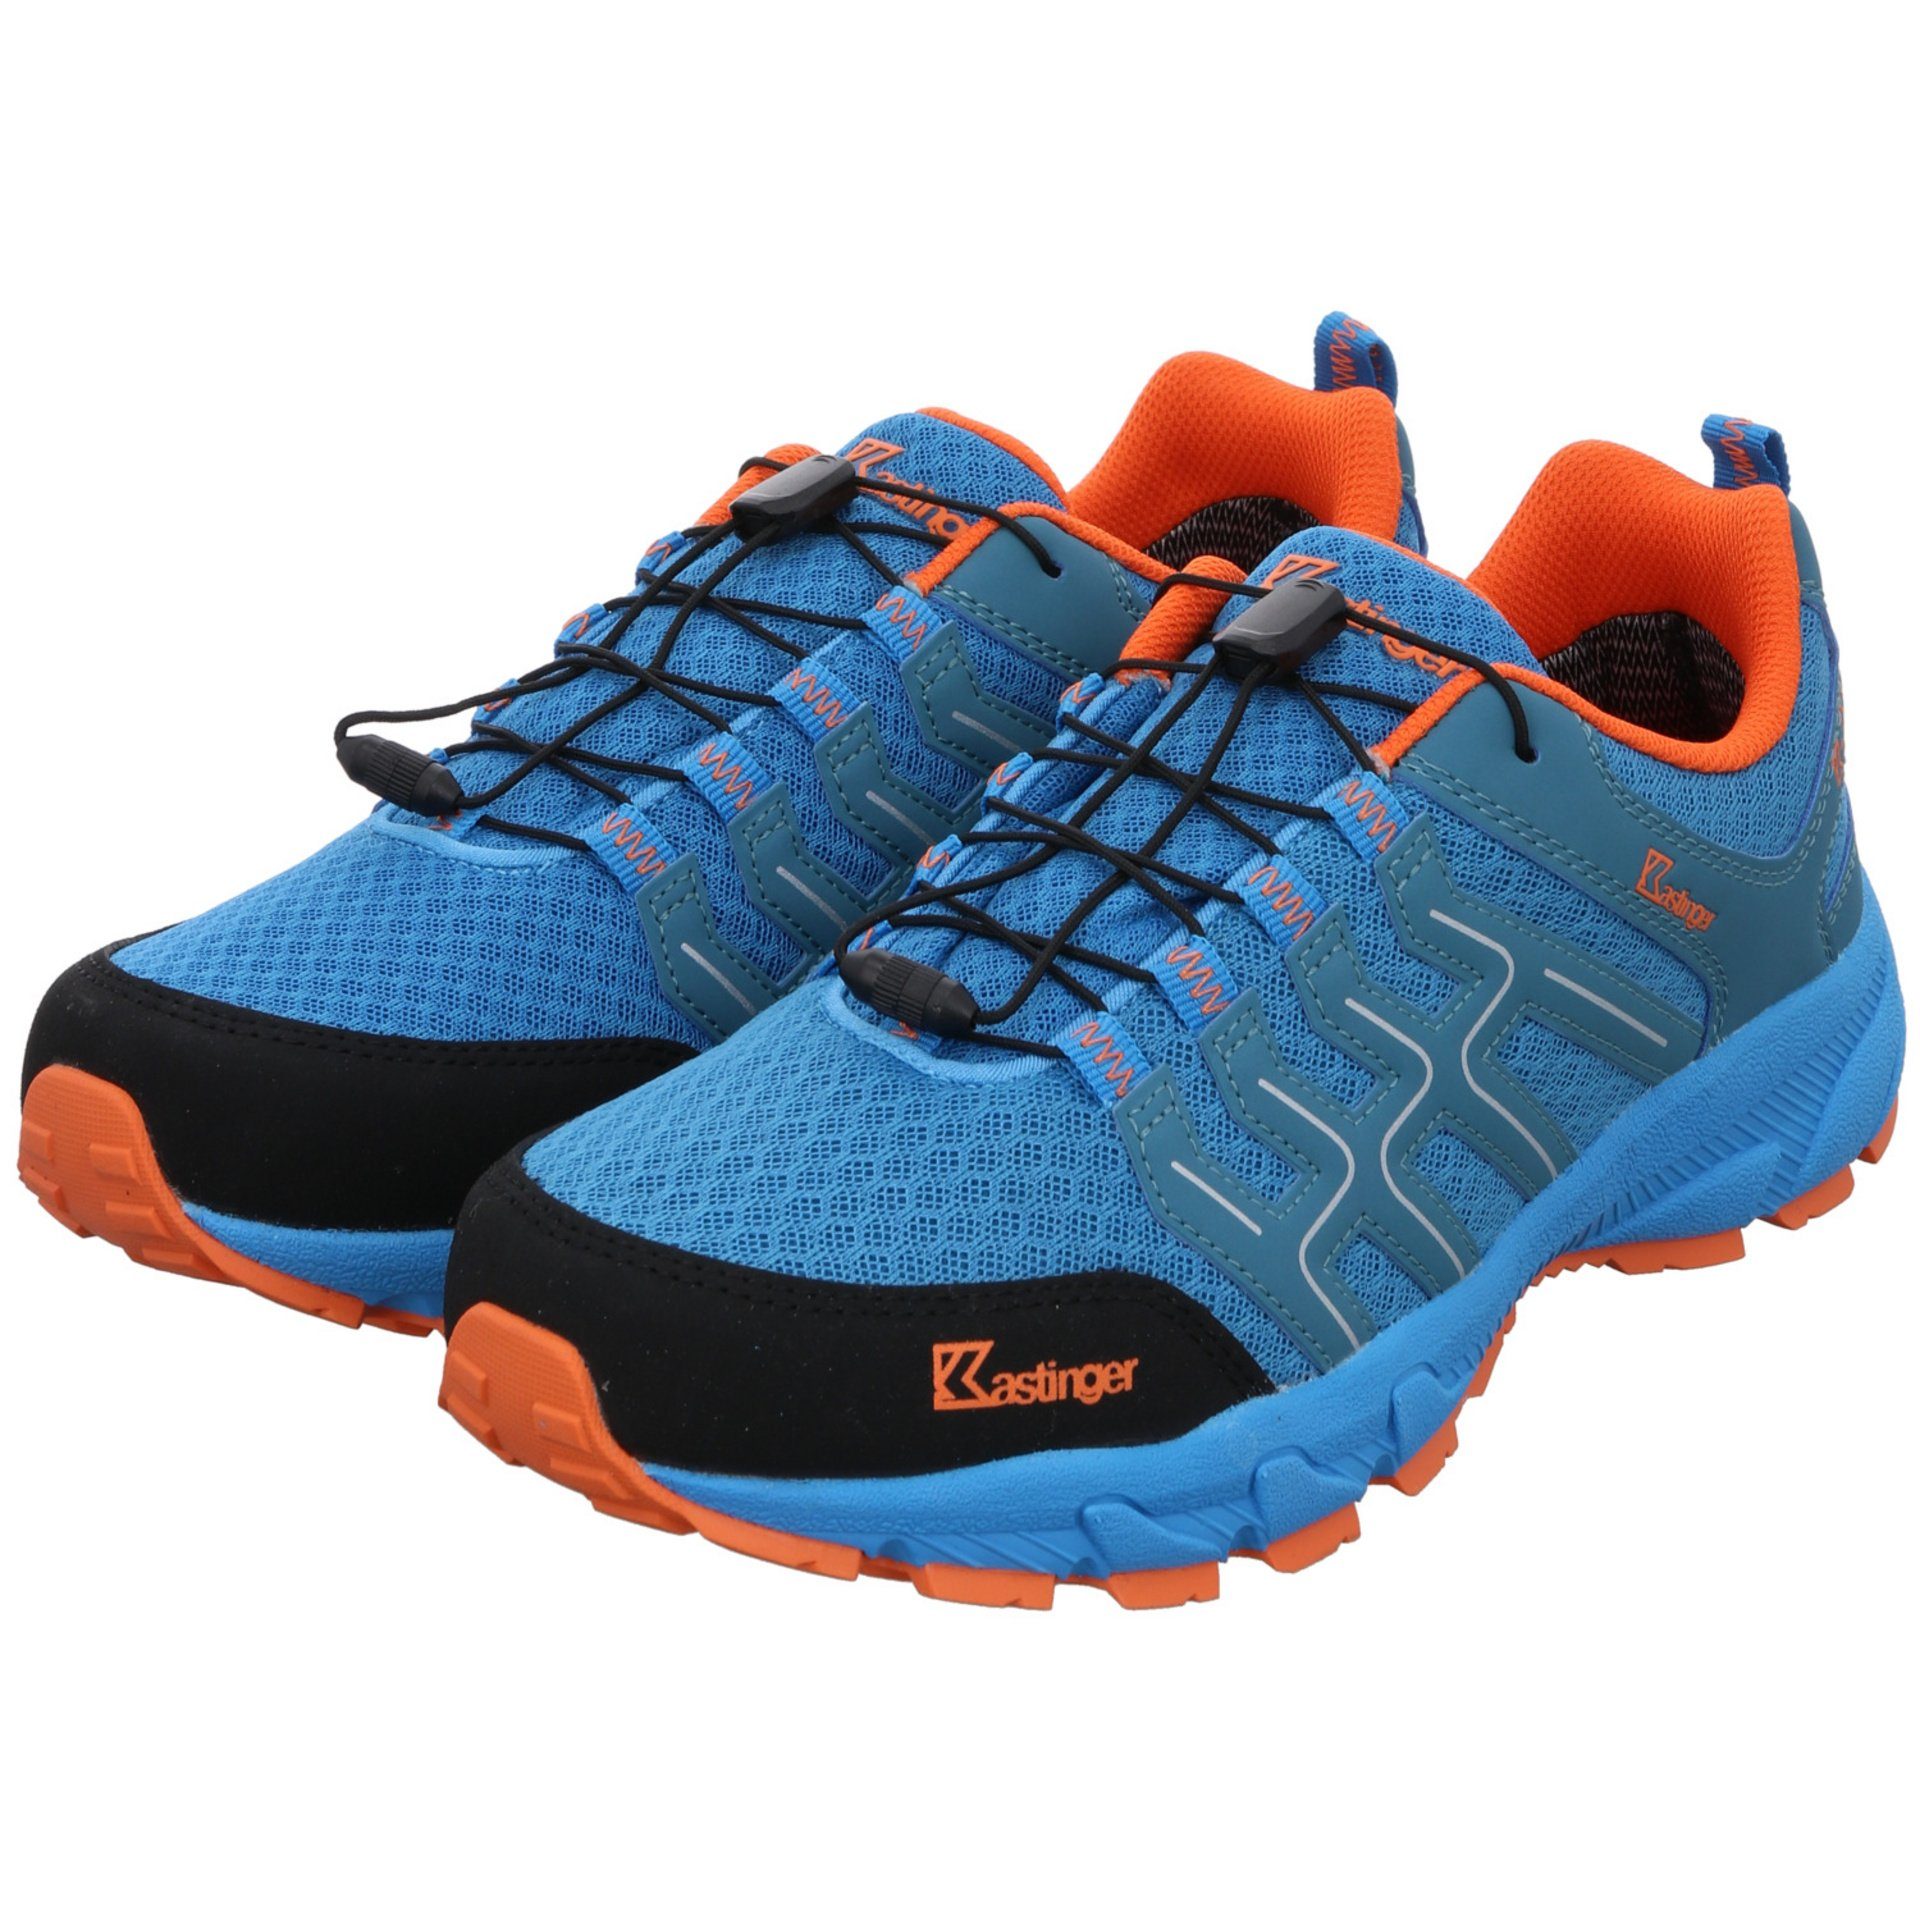 Damen Synthetikkombination Schuhe Trailrunner blue/orange Kastinger Outdoorschuh Outdoorschuh Outdoor